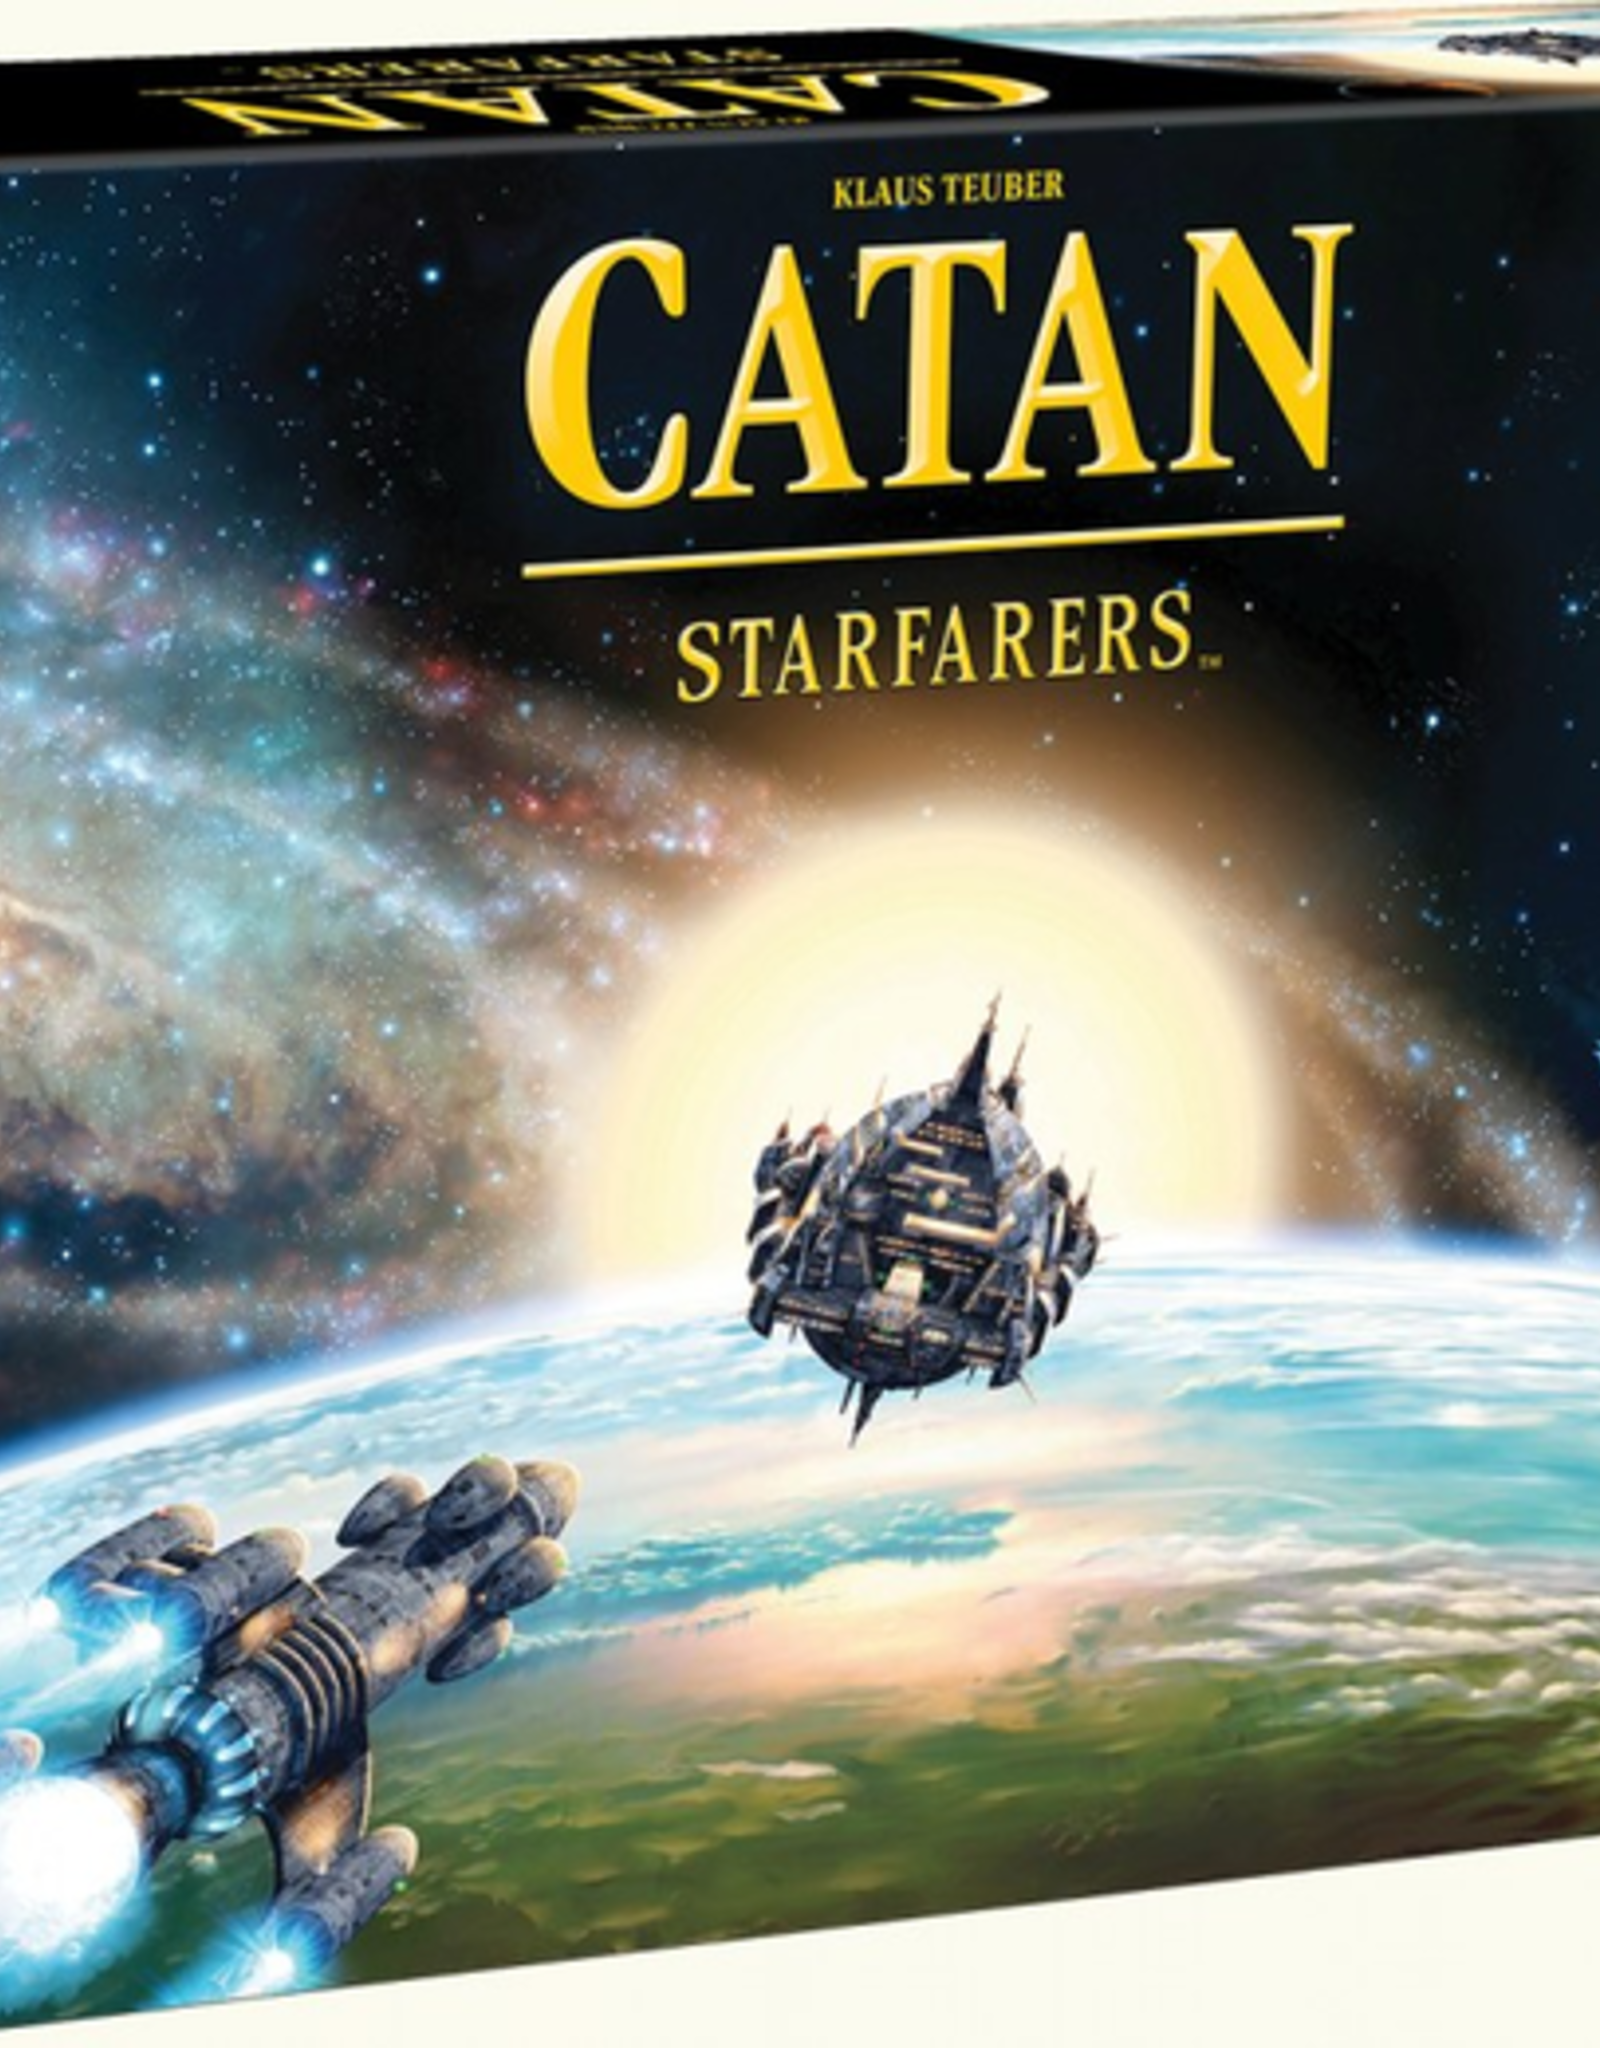 Catan Studio Catan Starfarers 2nd Edition